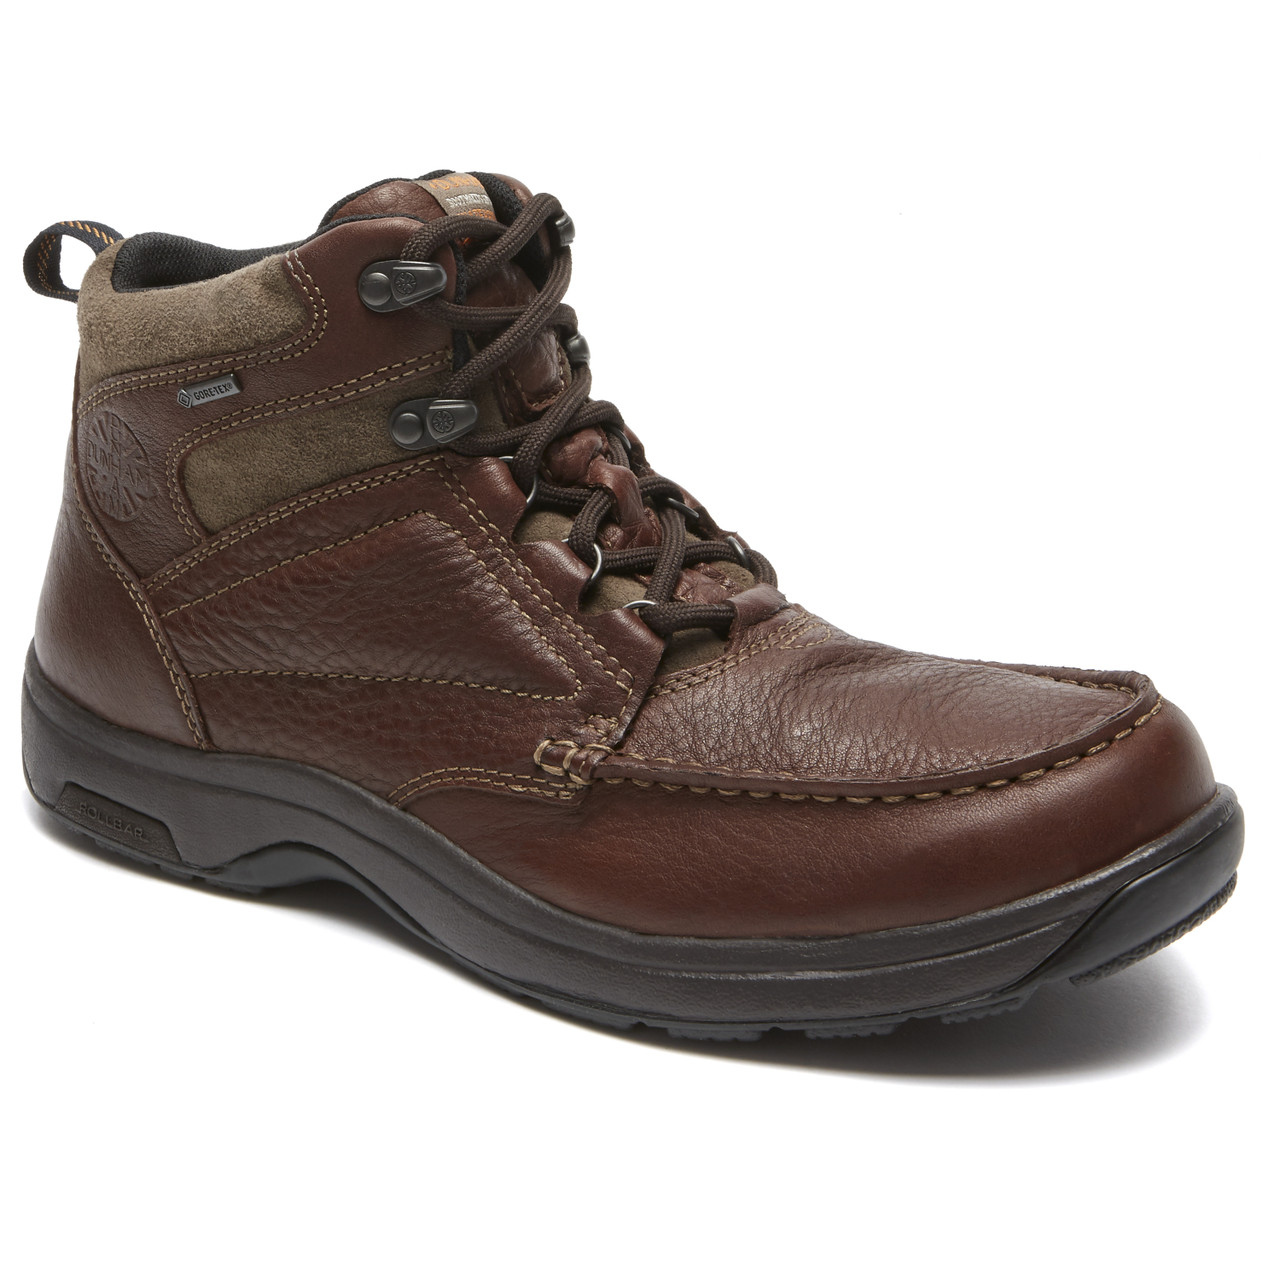 Dunham Men's Exeter Waterproof Chukka Boot Style 8016DBR - Right Foot Shoes